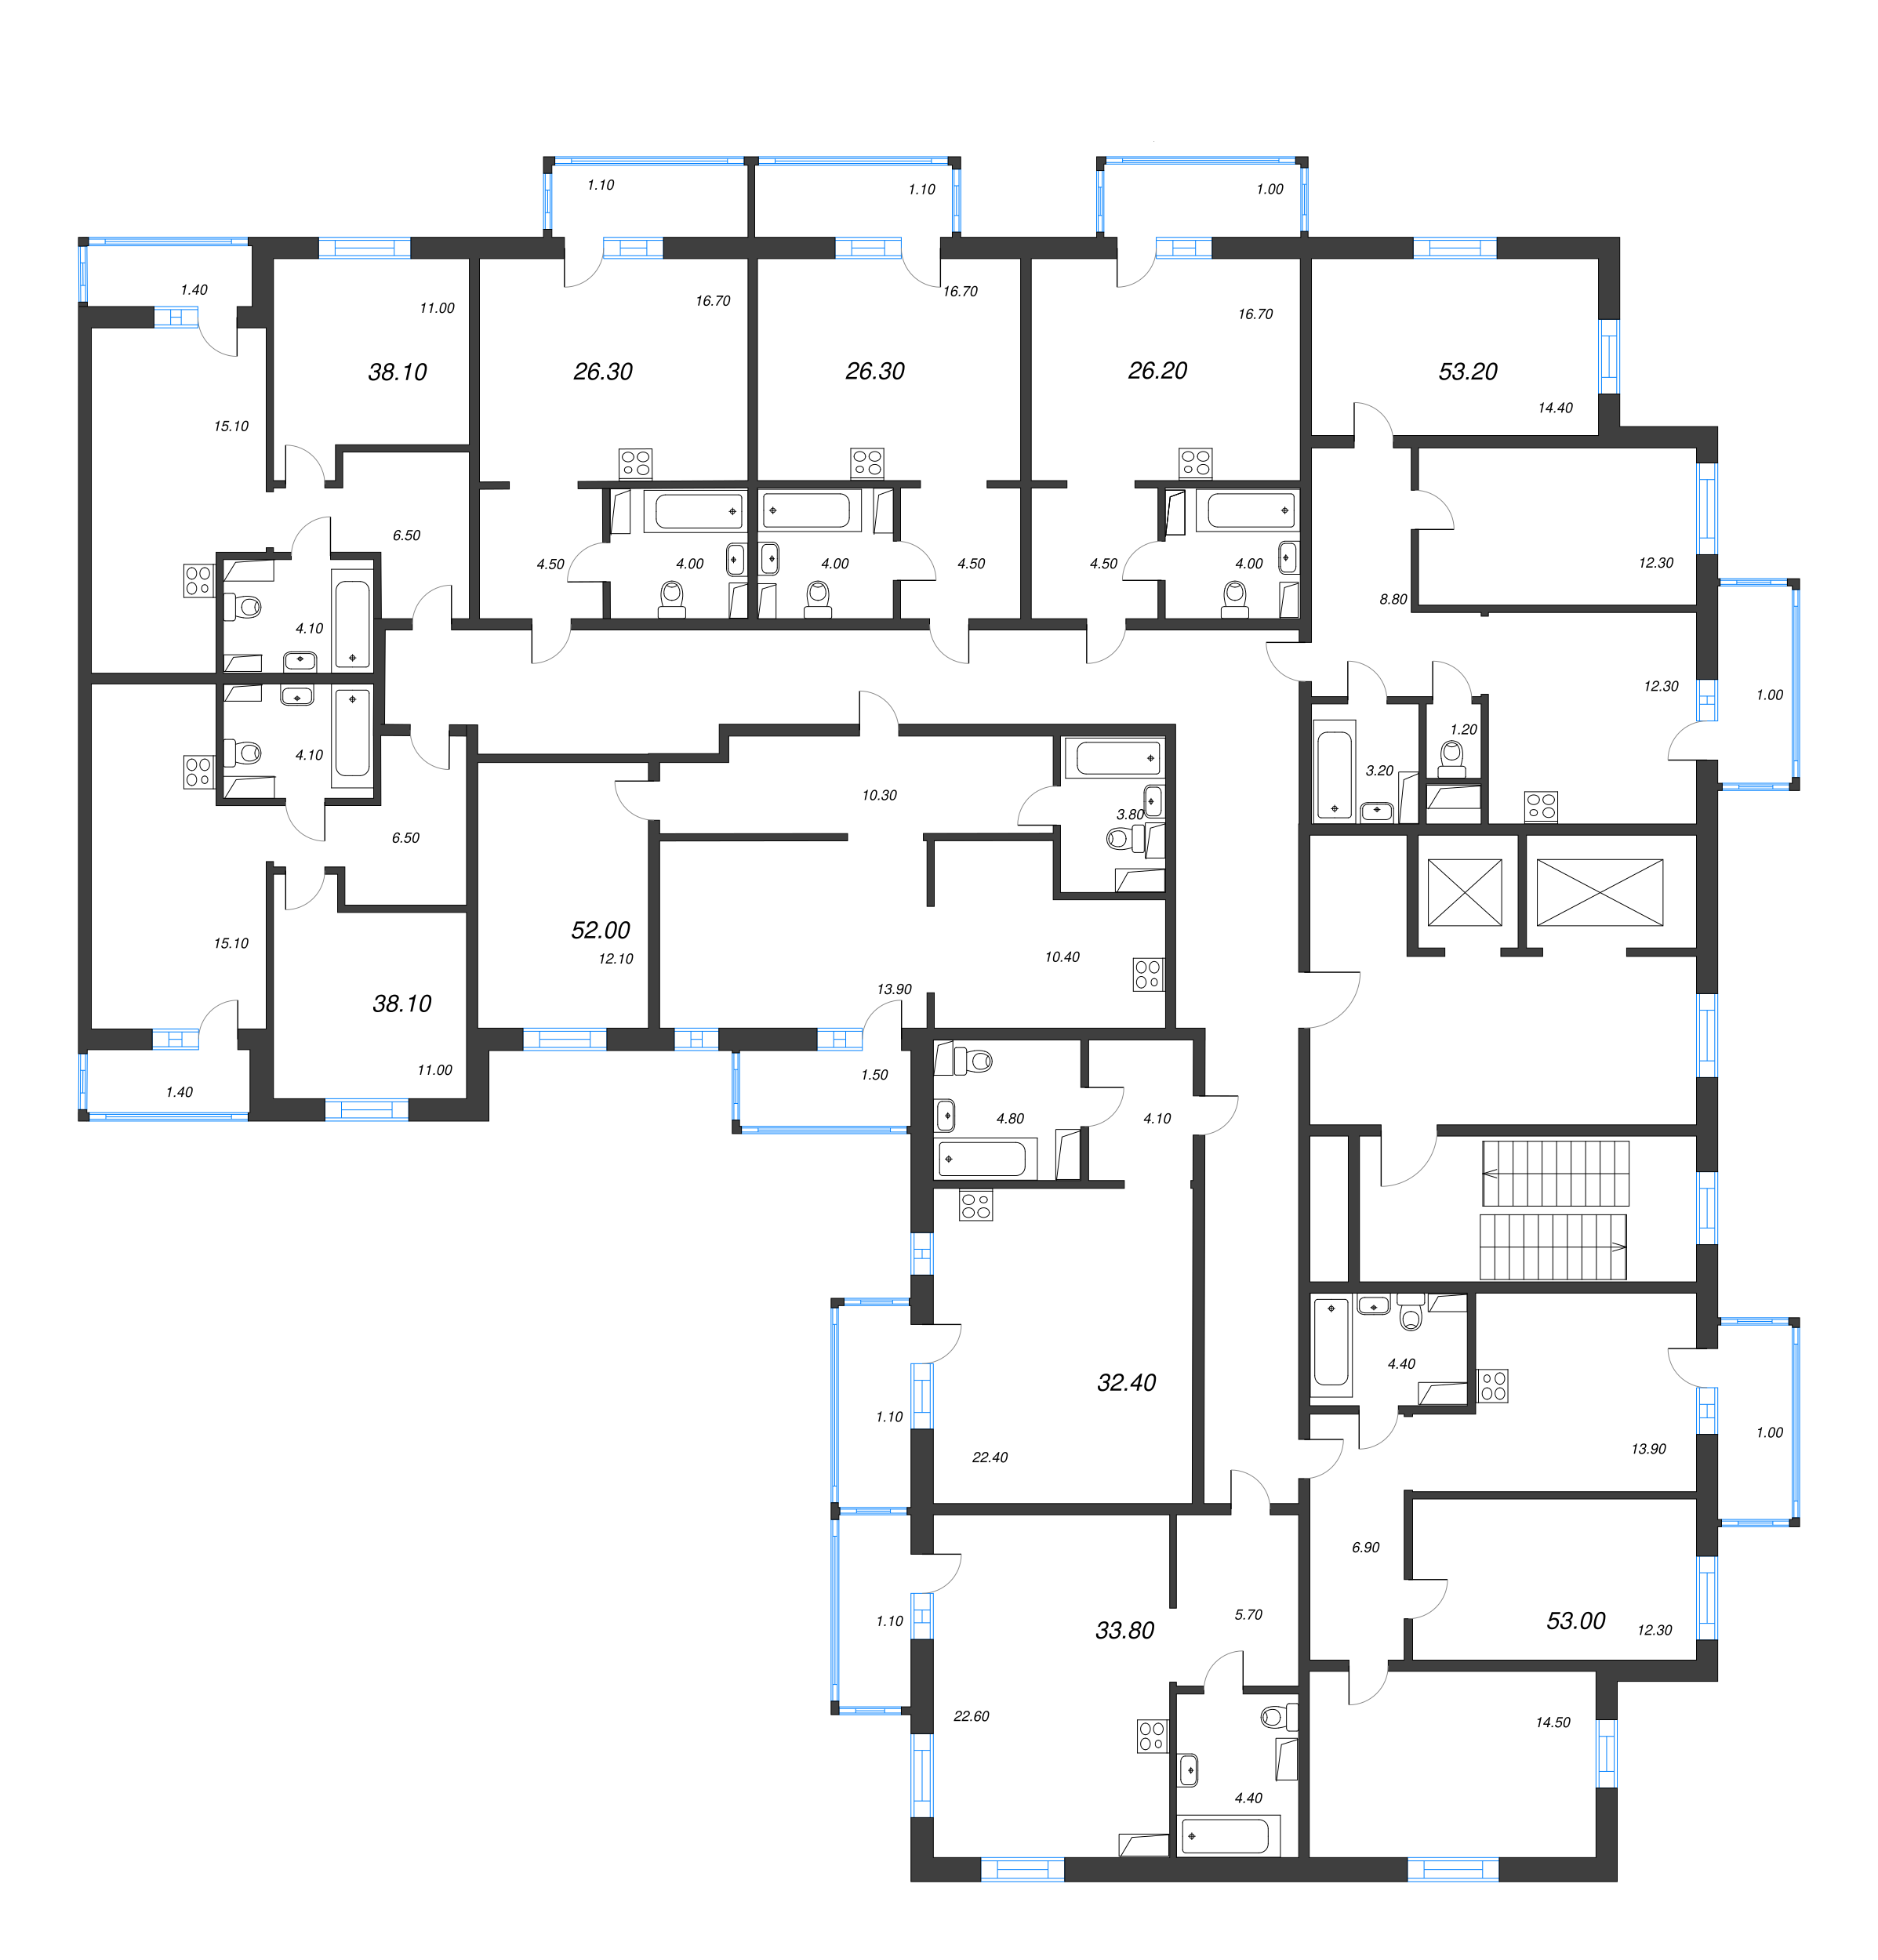 2-комнатная (Евро) квартира, 38.1 м² - планировка этажа